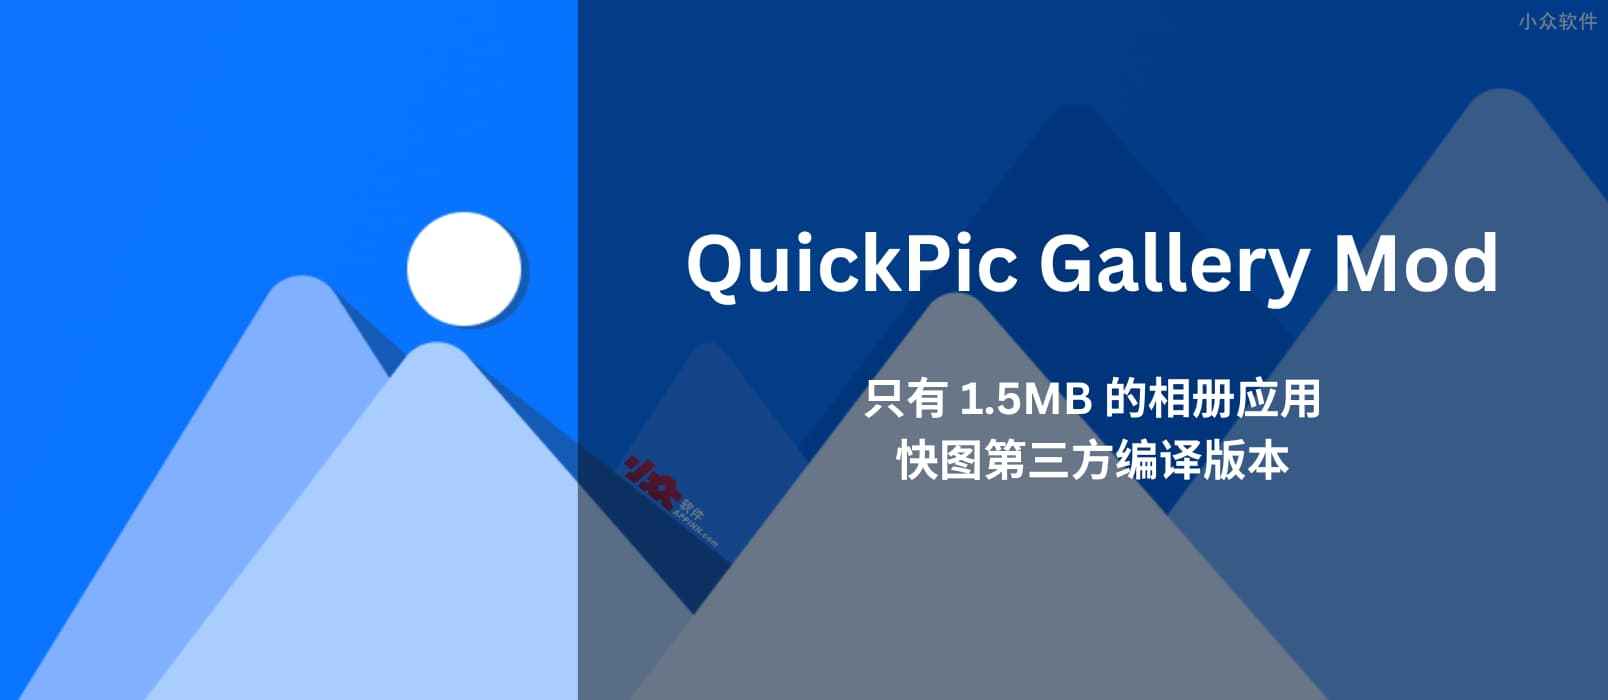 QuickPic Gallery Mod – 只有 1.5MB 的相册应用，快图第三方编译版本[Android]